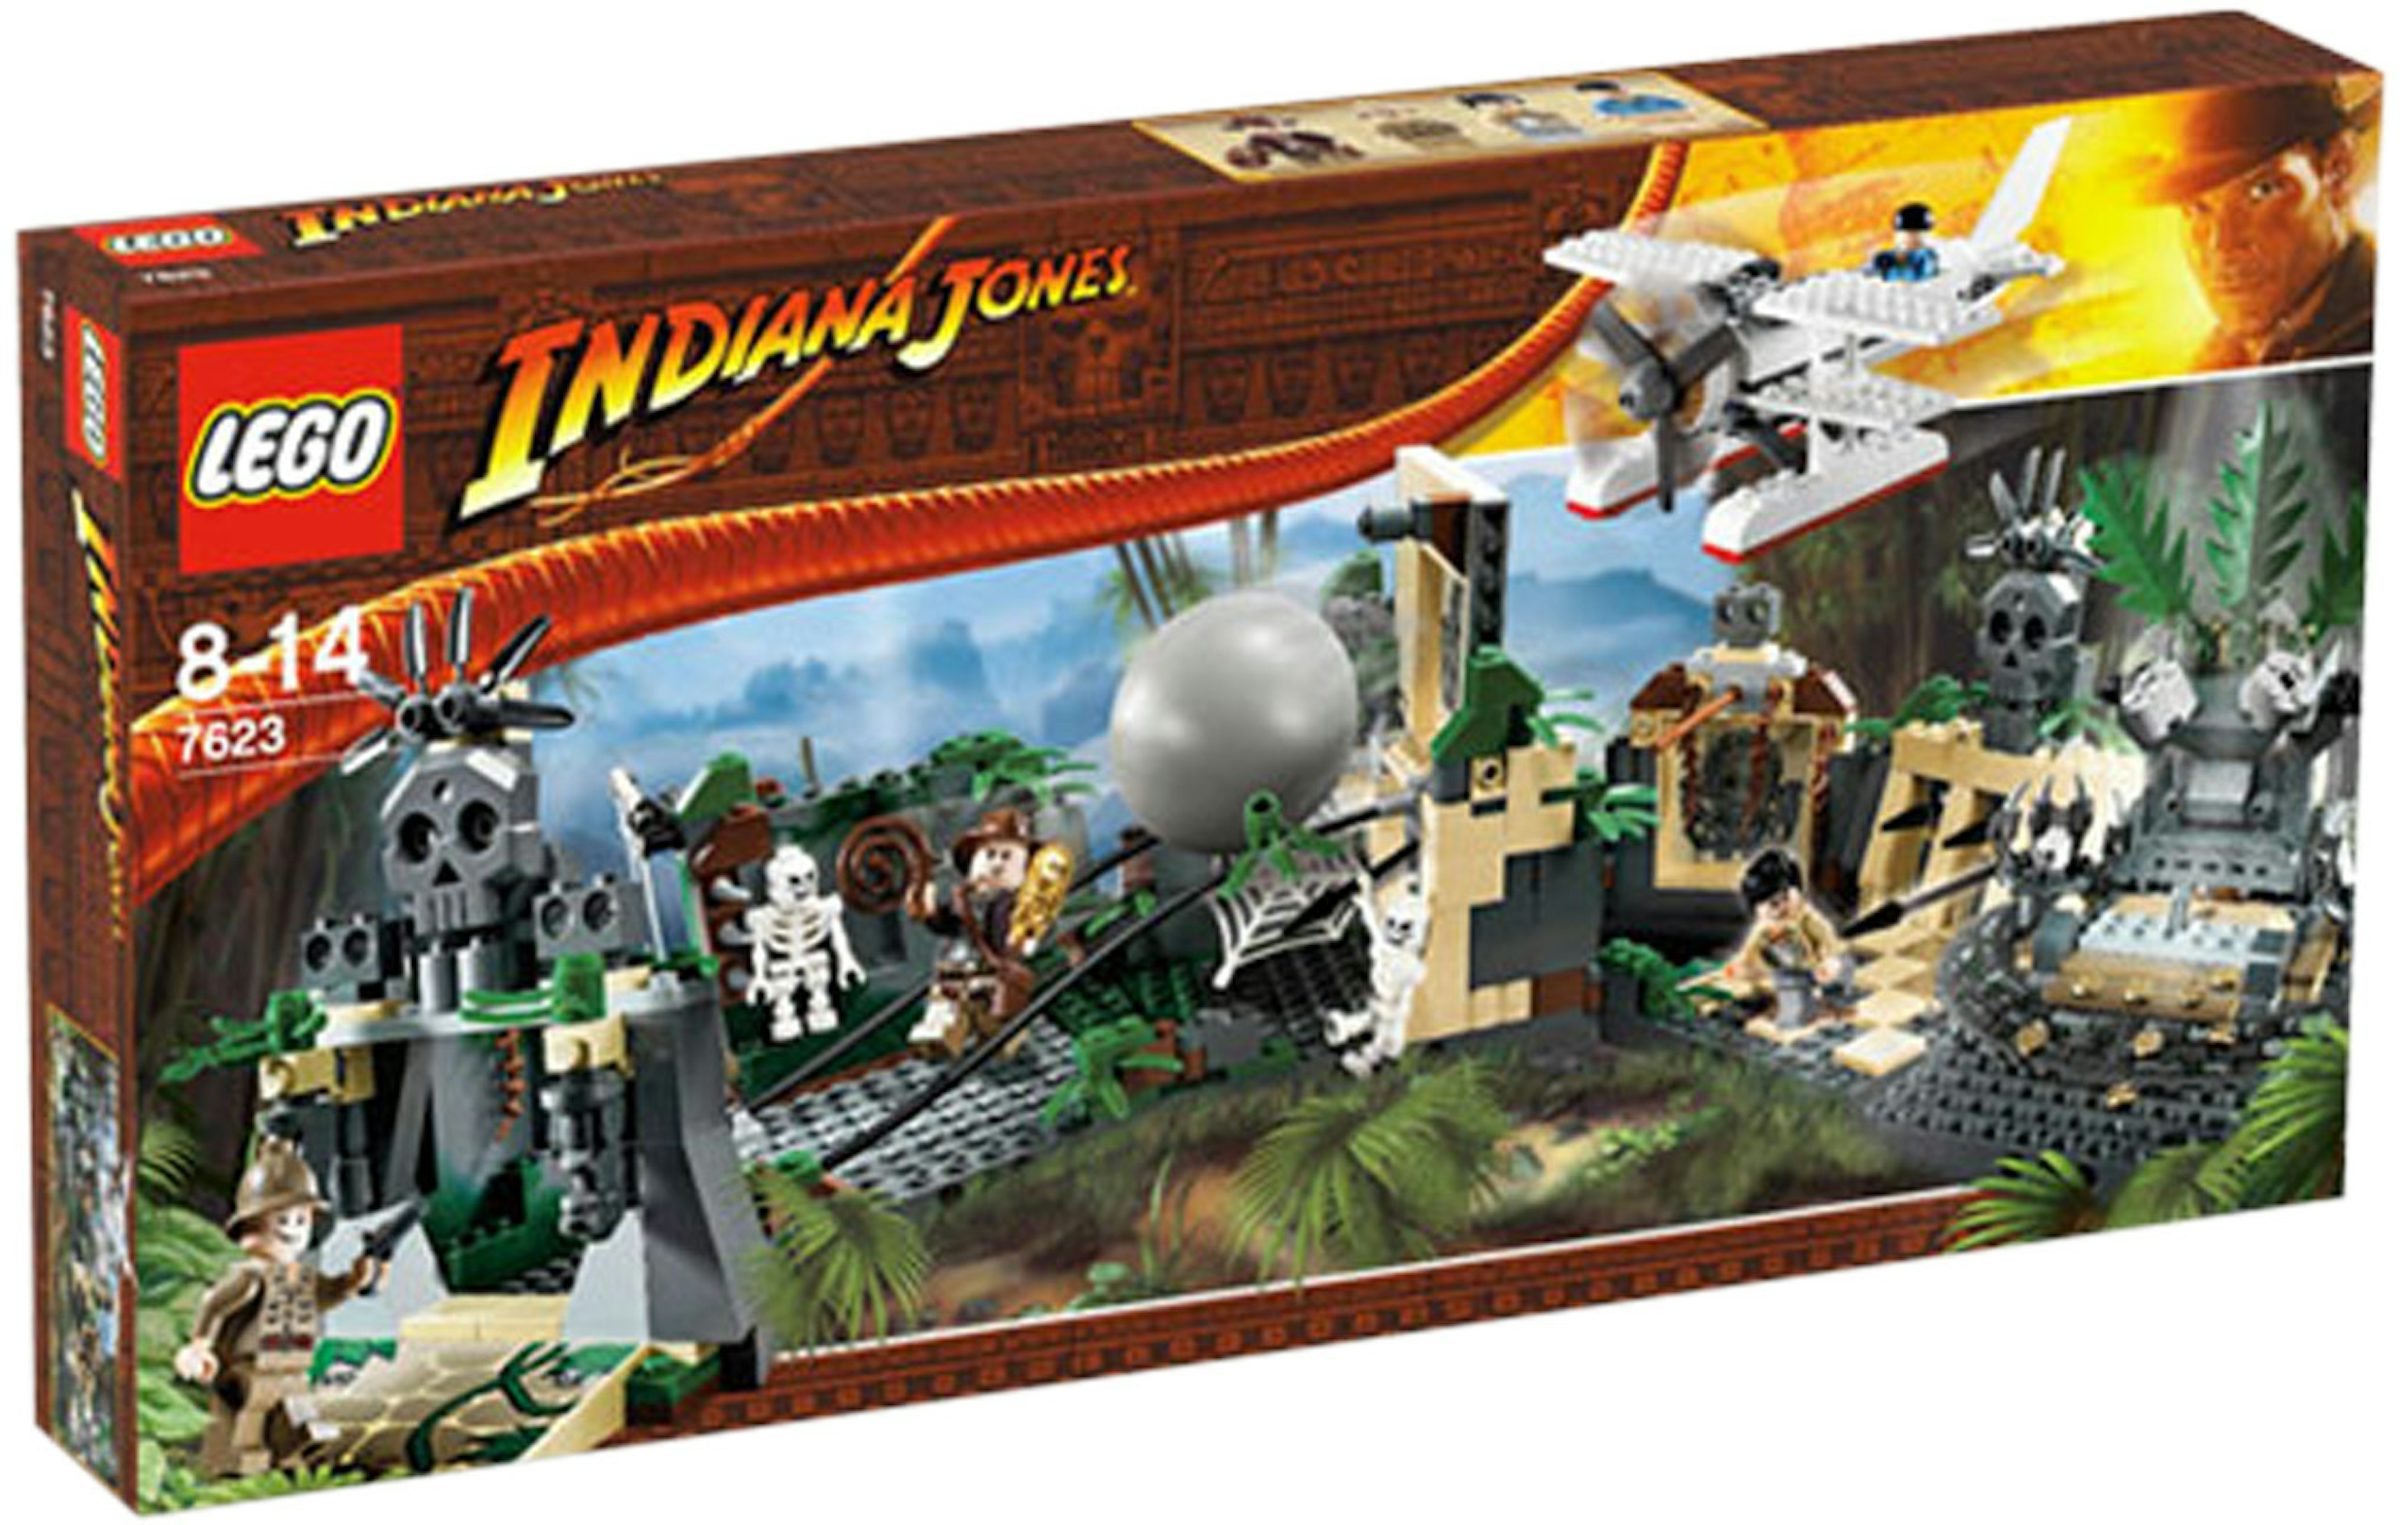 Lego Indiana Jones 2 Commercial 